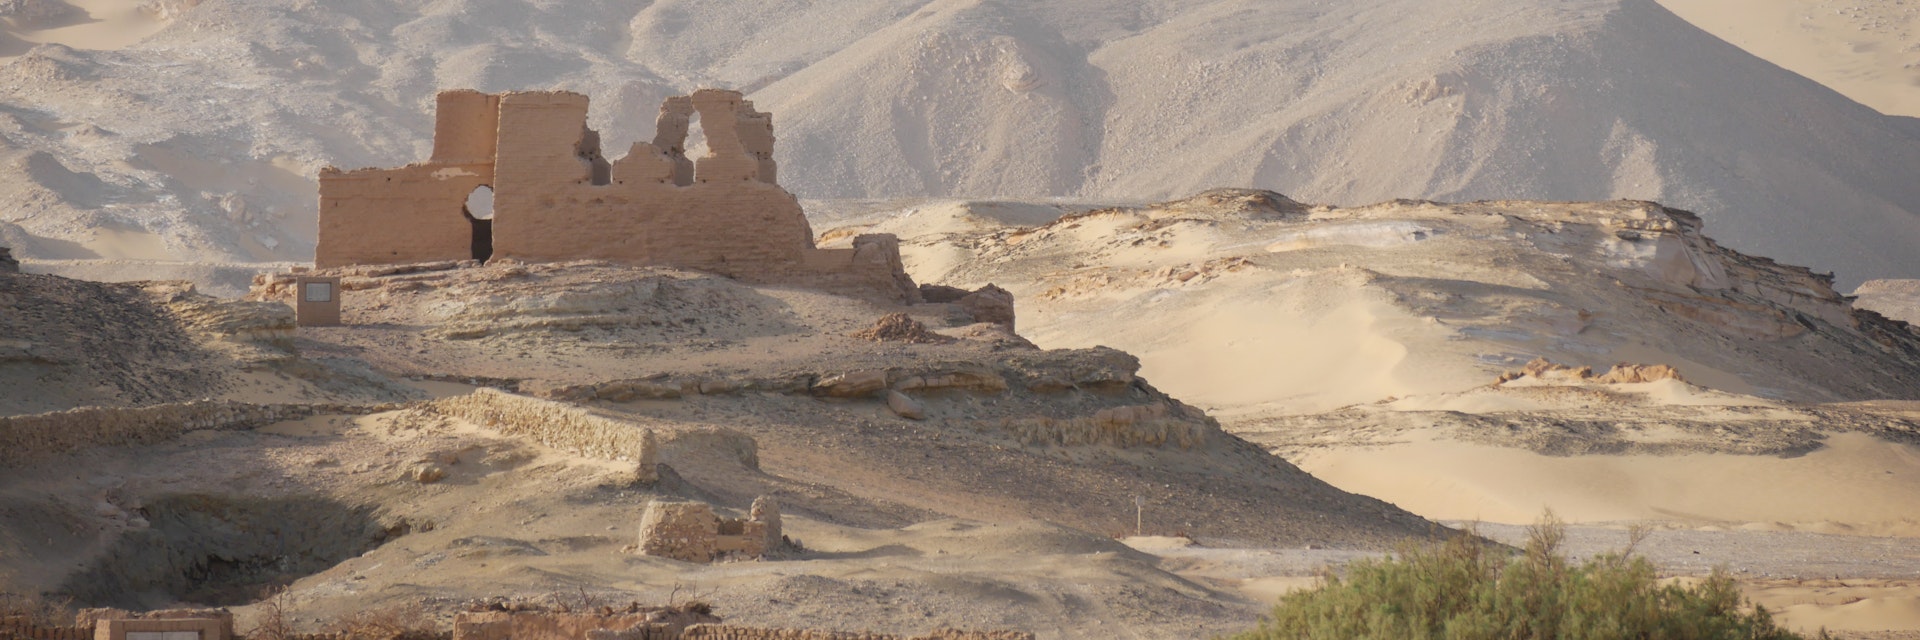 The ruins of Qasr Al Labakha in the desert.